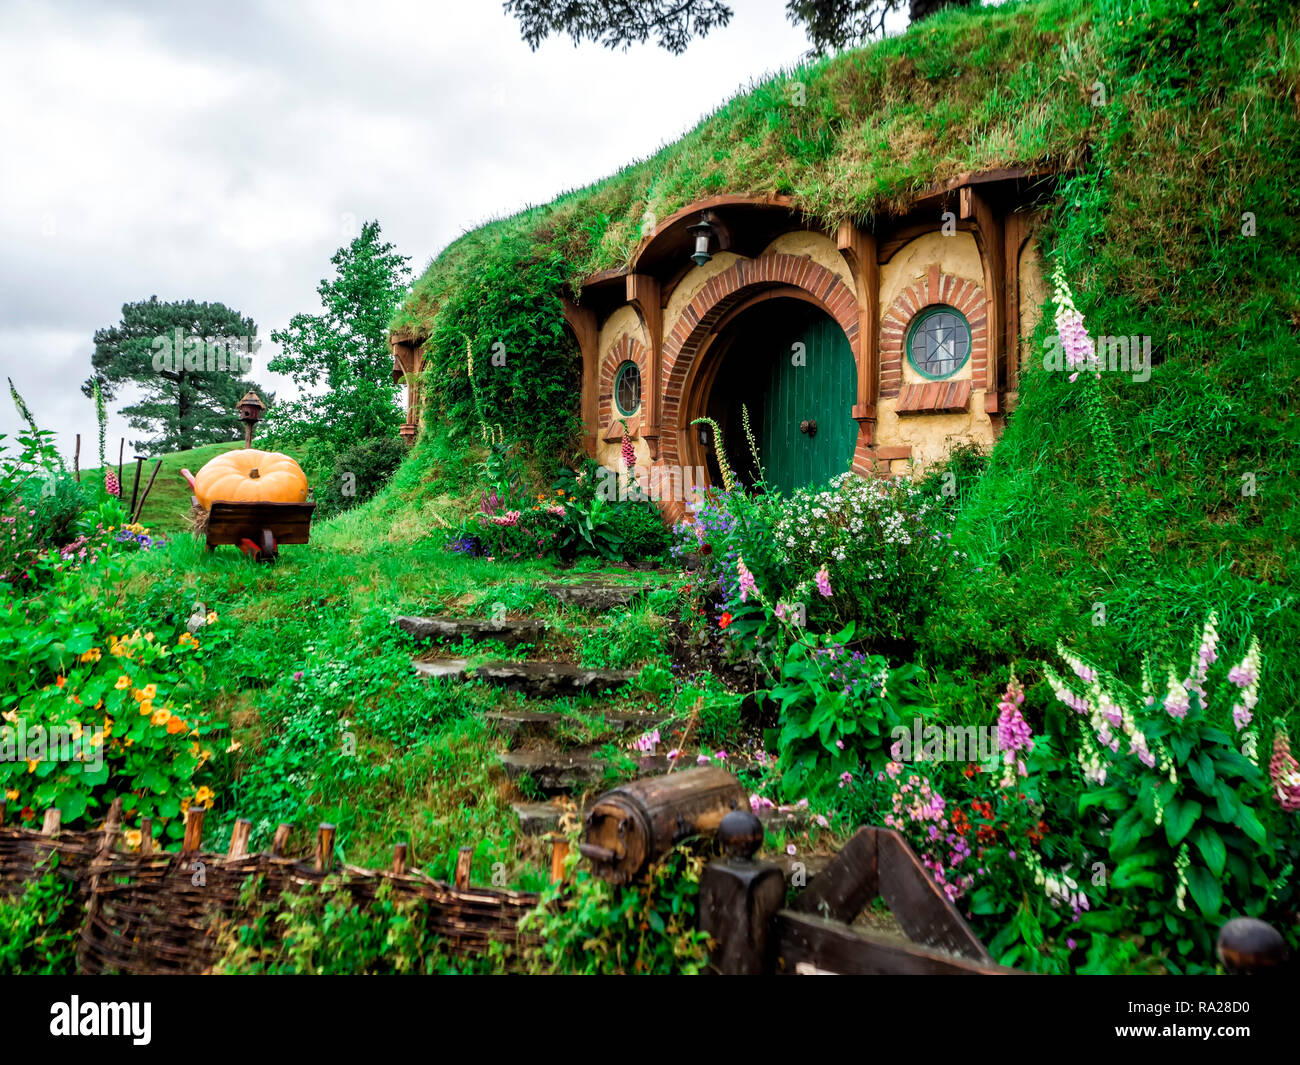 1st of December, 2018: Bilbo and Frodo Baggins House at Hobbiton Movie Set - Matamata, South Island, New Zealand Stock Photo